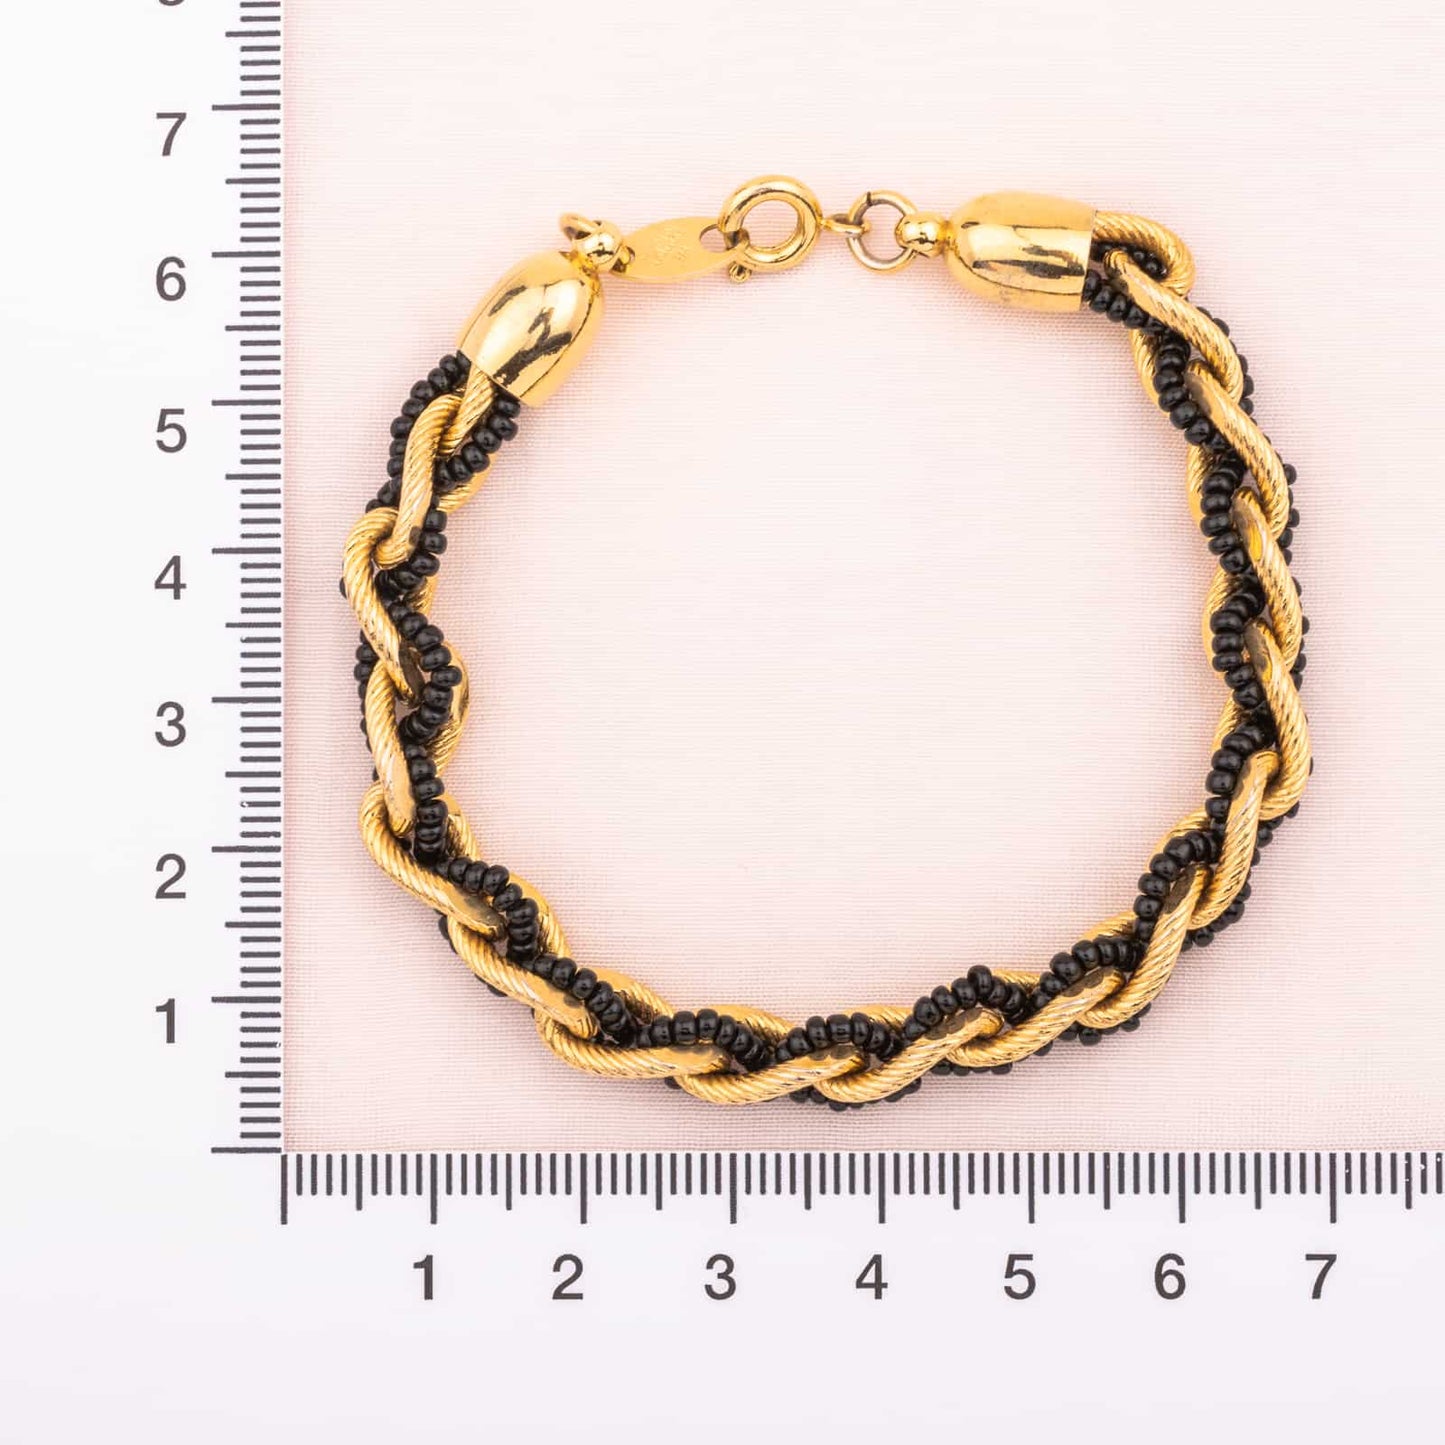 Trifari-Armband-vergoldete-Kettenglieder-schwarze-Perlen